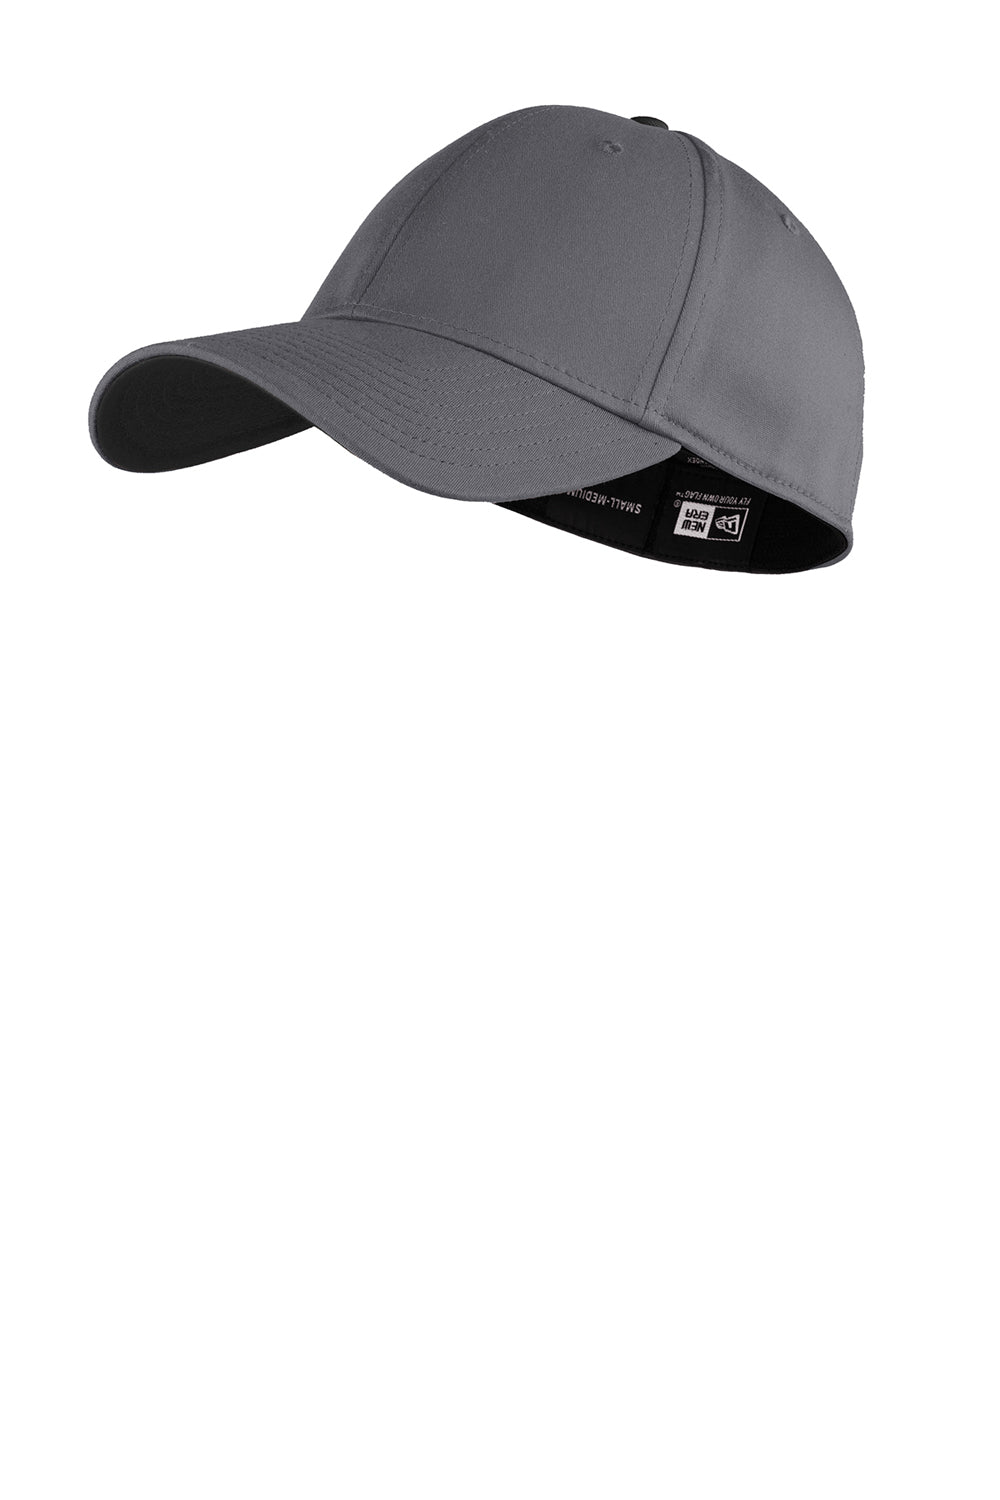 New Era NE1100 Mens Stretch Fit Hat Graphite Grey/Black Front